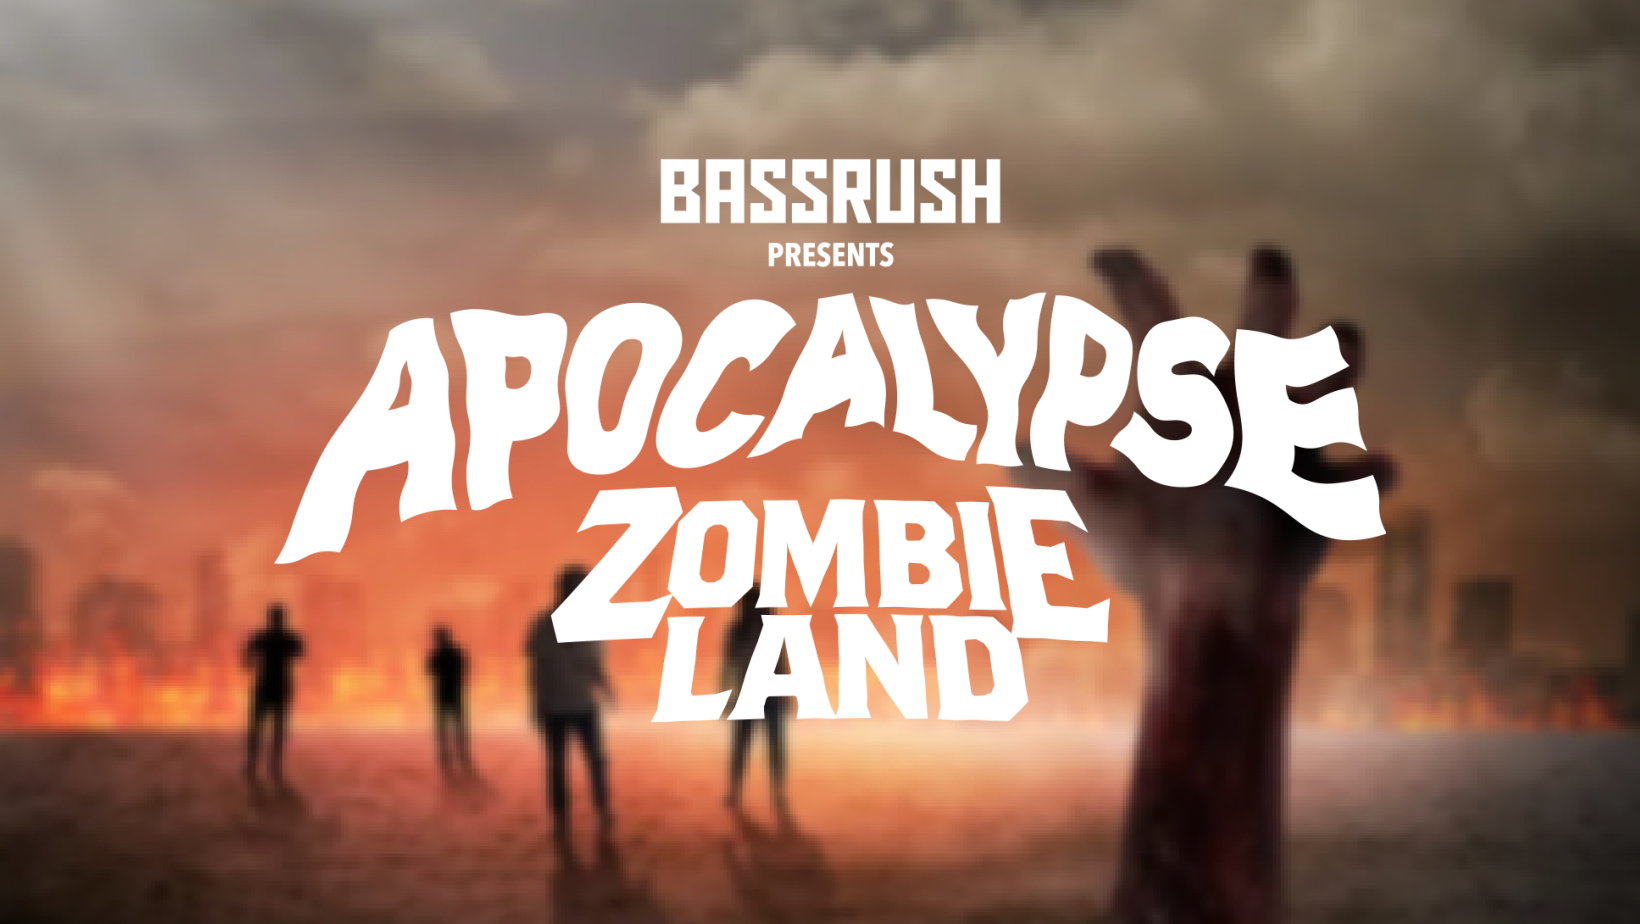 Single Day Tickets to Apocalypse Zombieland Now On Sale